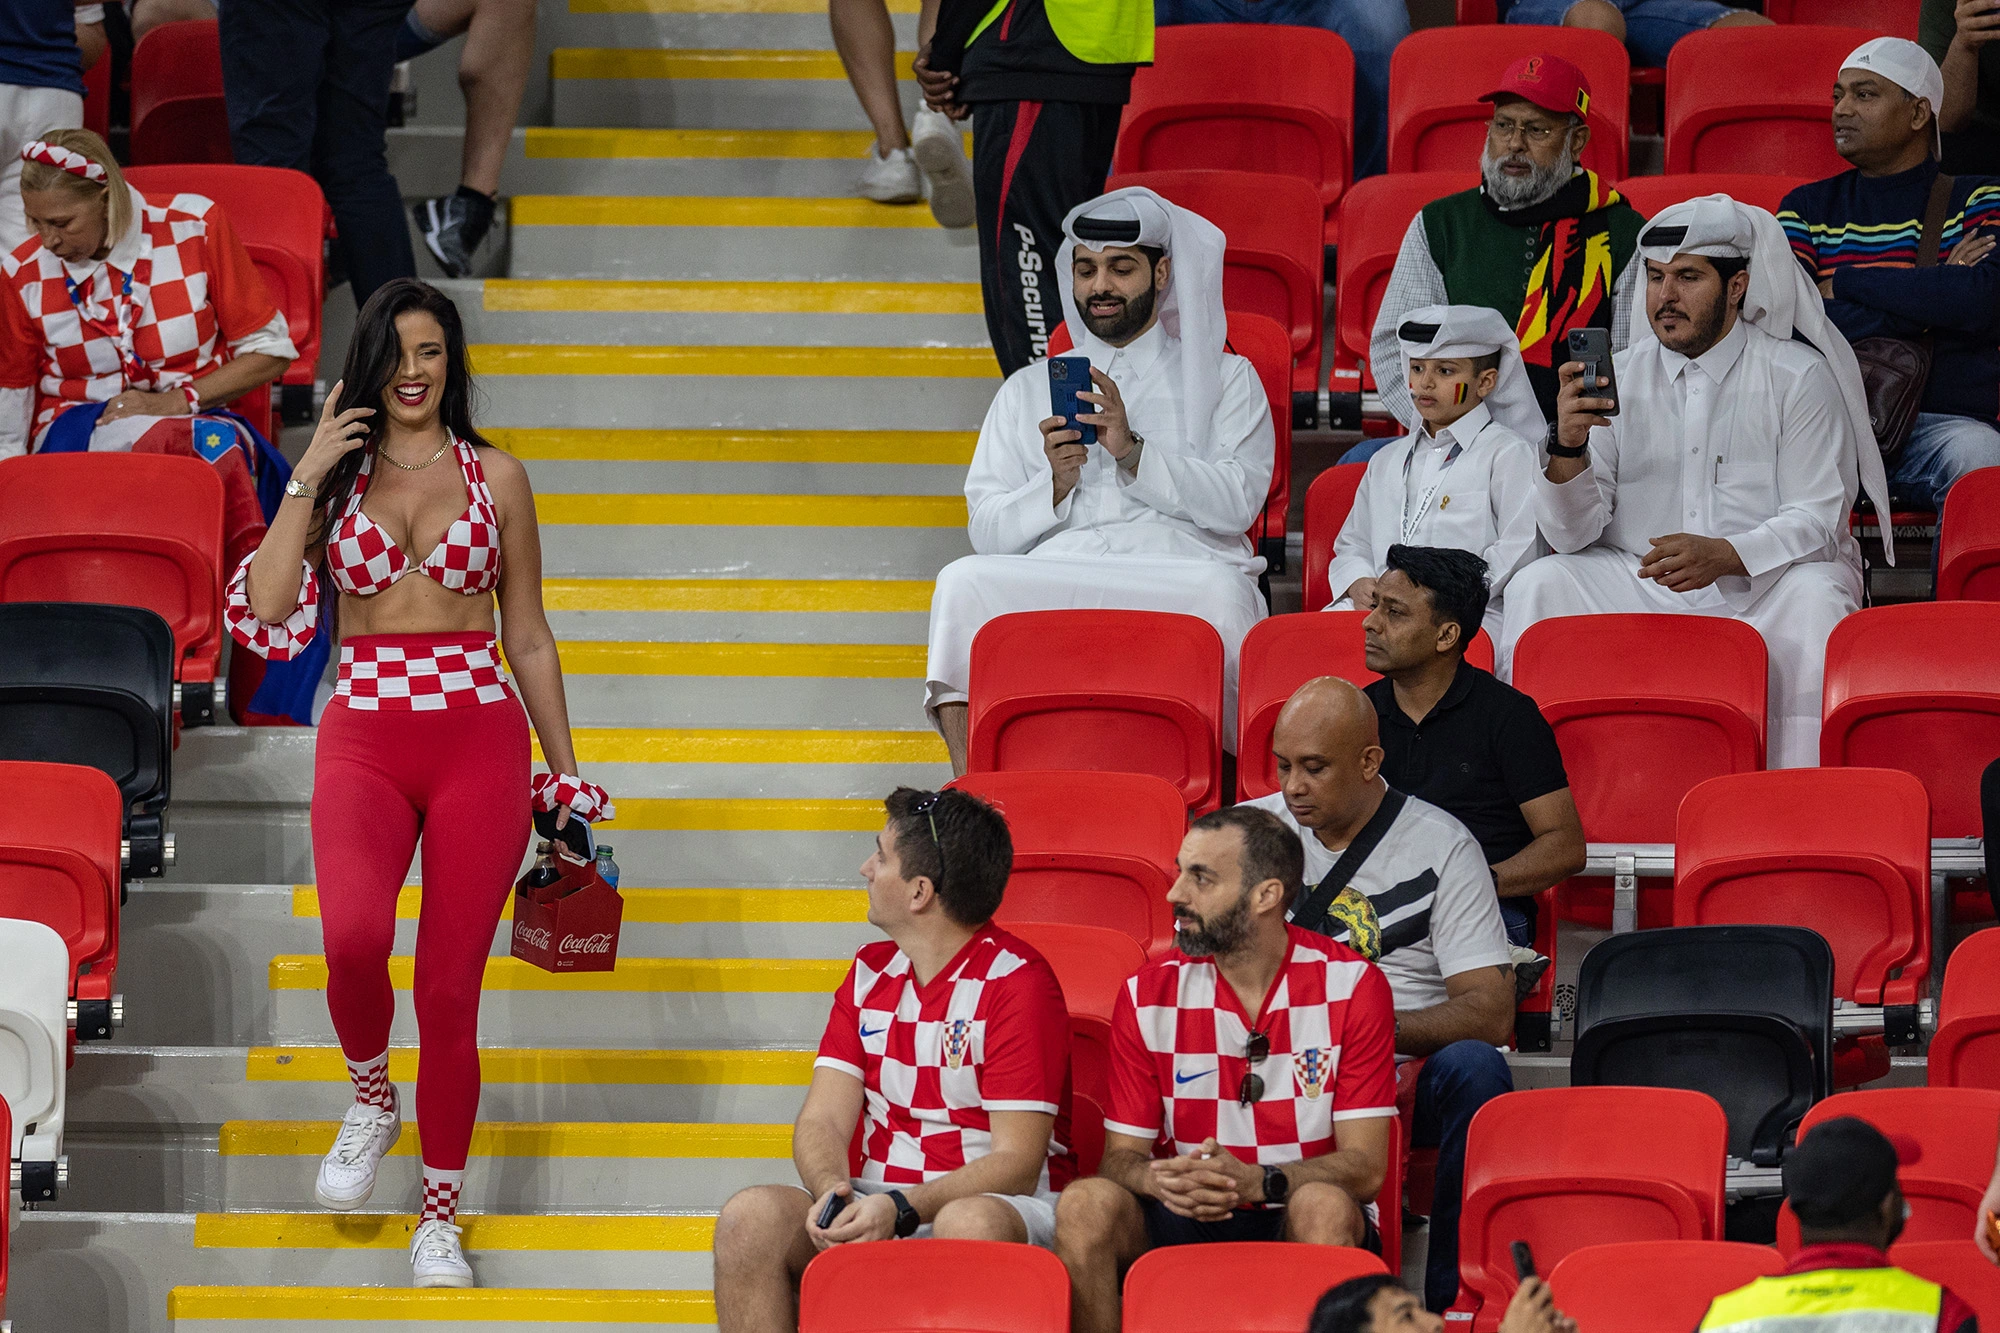 Ivana Knoll vs the Qatari dress code